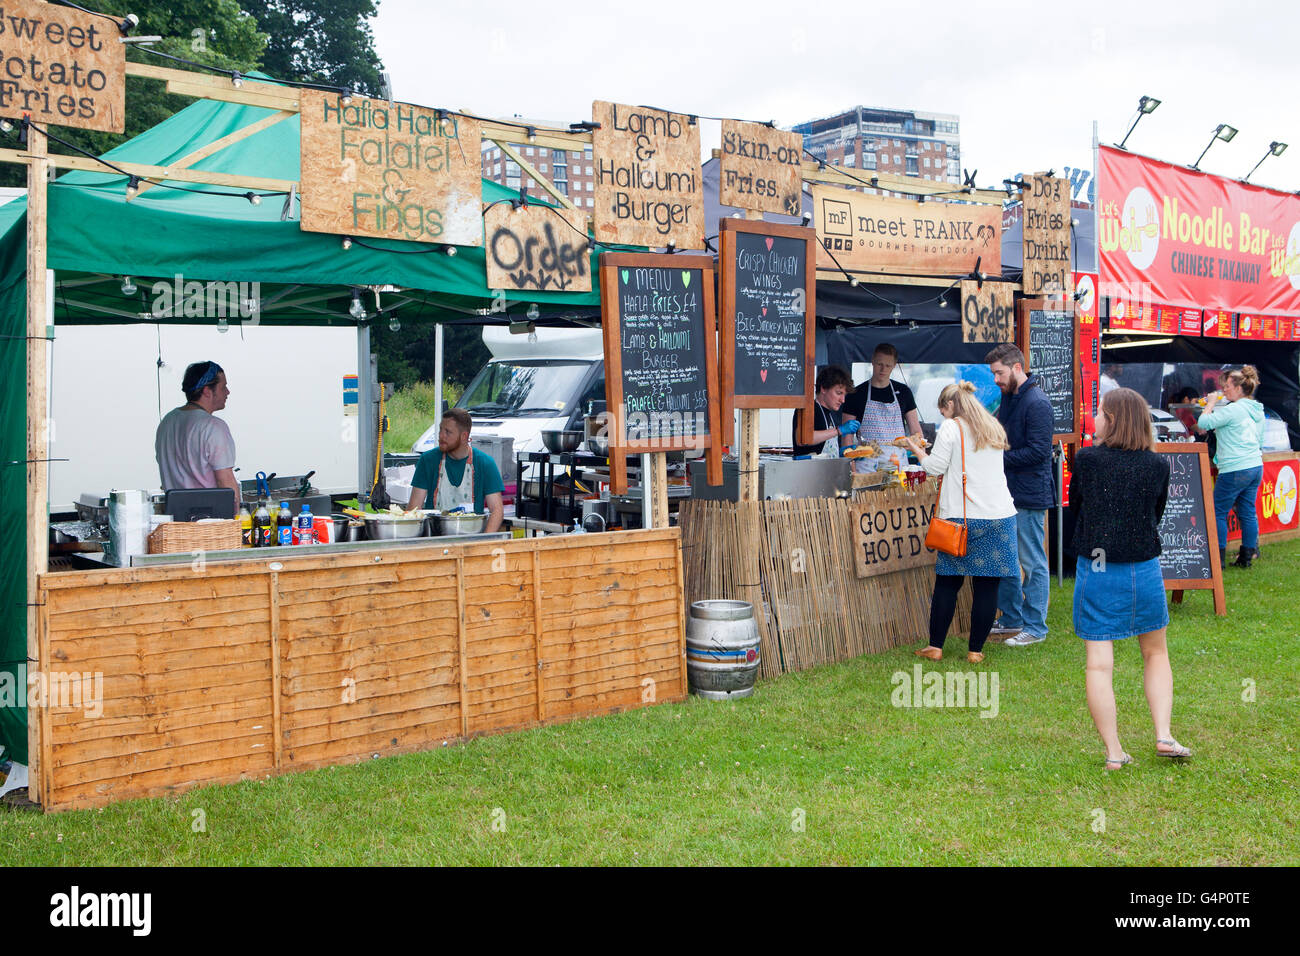 Tienda Vans Festival Park Sale Clearance, 58% OFF | doonbiblecollege.org